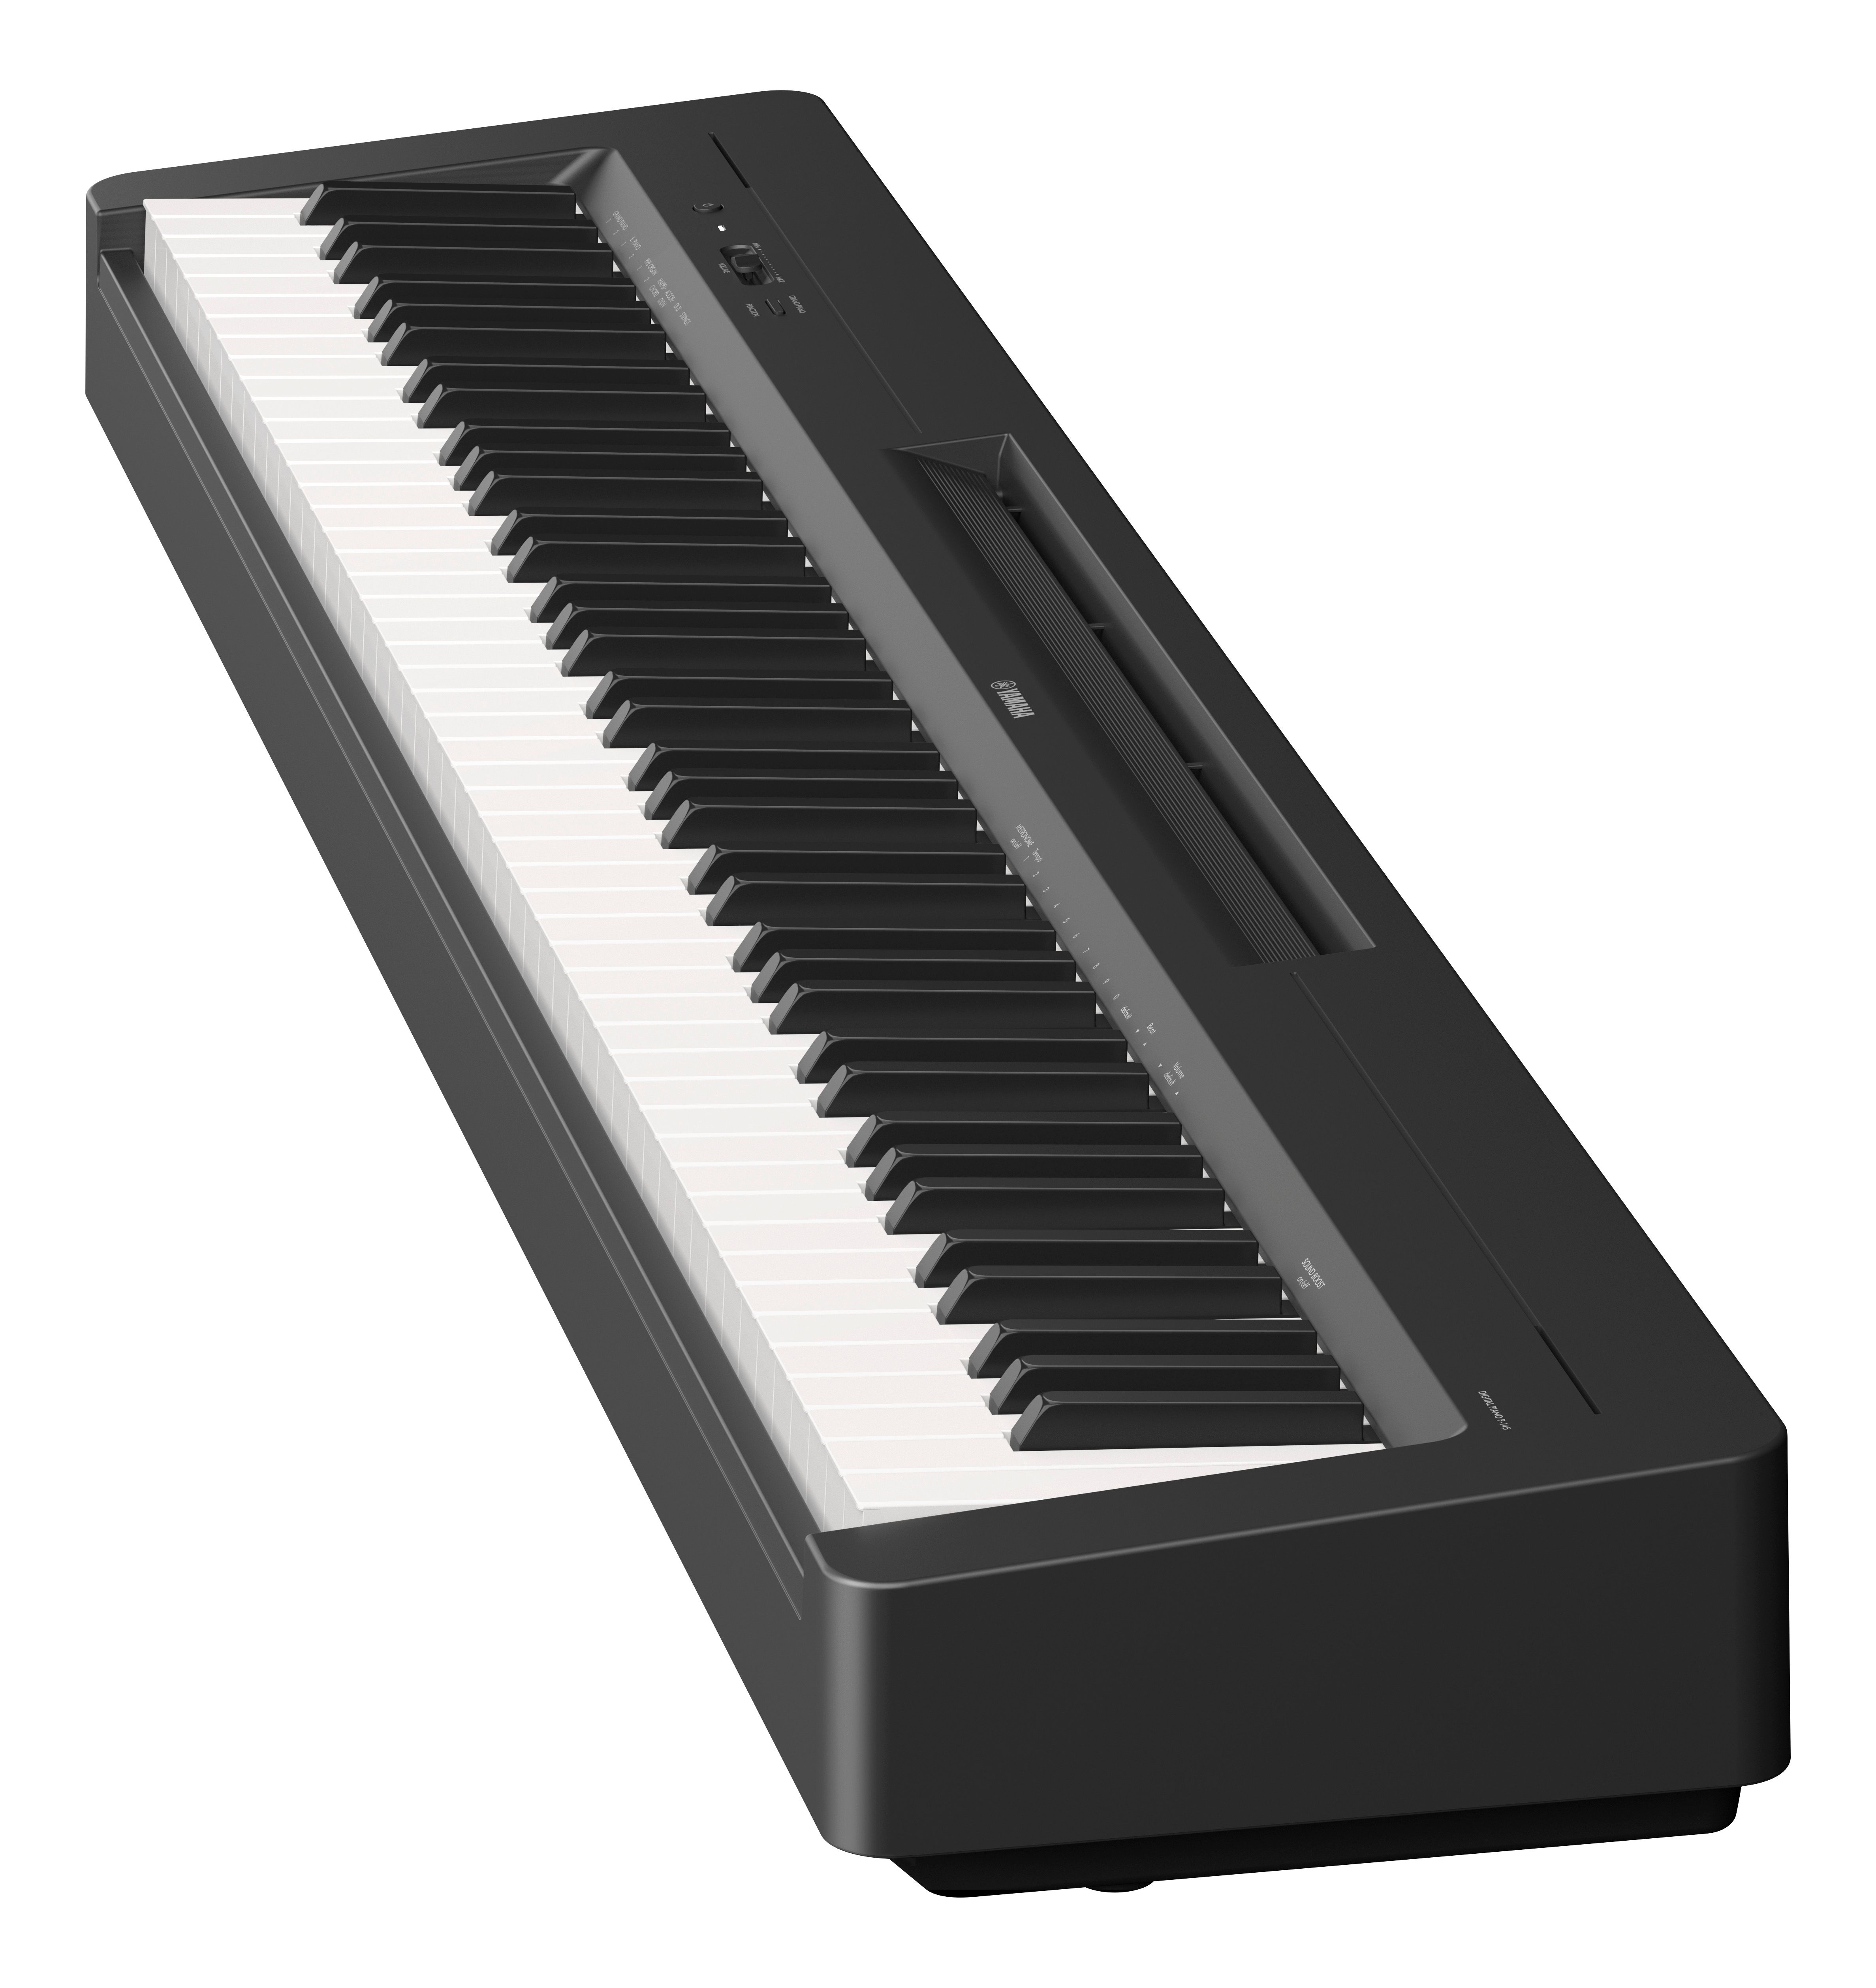 Yamaha P-145 Black - Portable digital piano - Variation 3